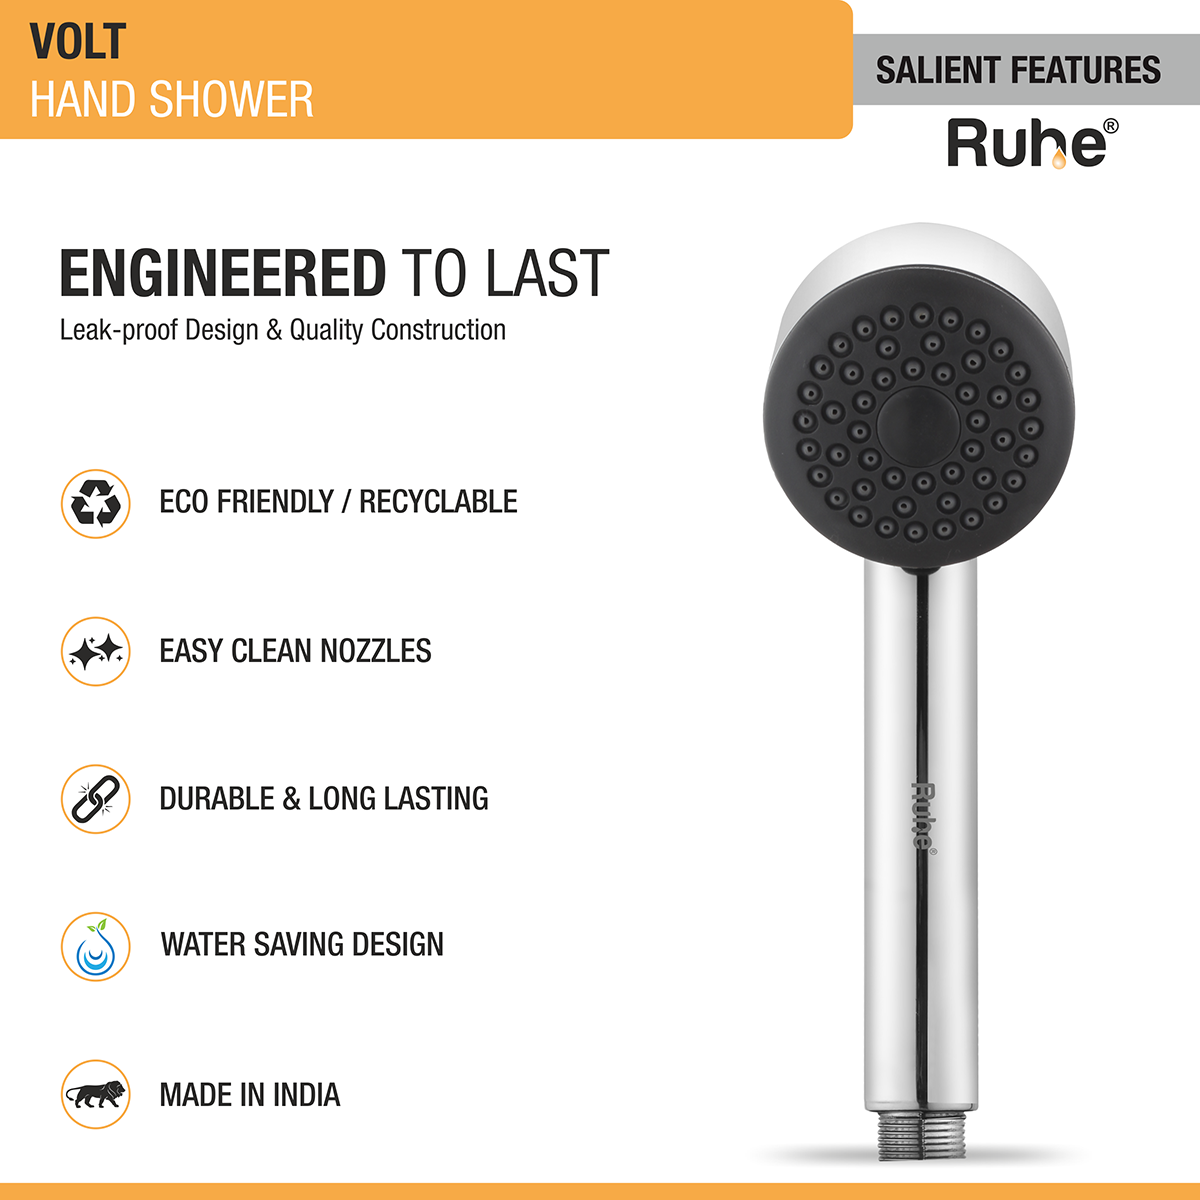 Volt Hand Shower (Only Showerhead) features